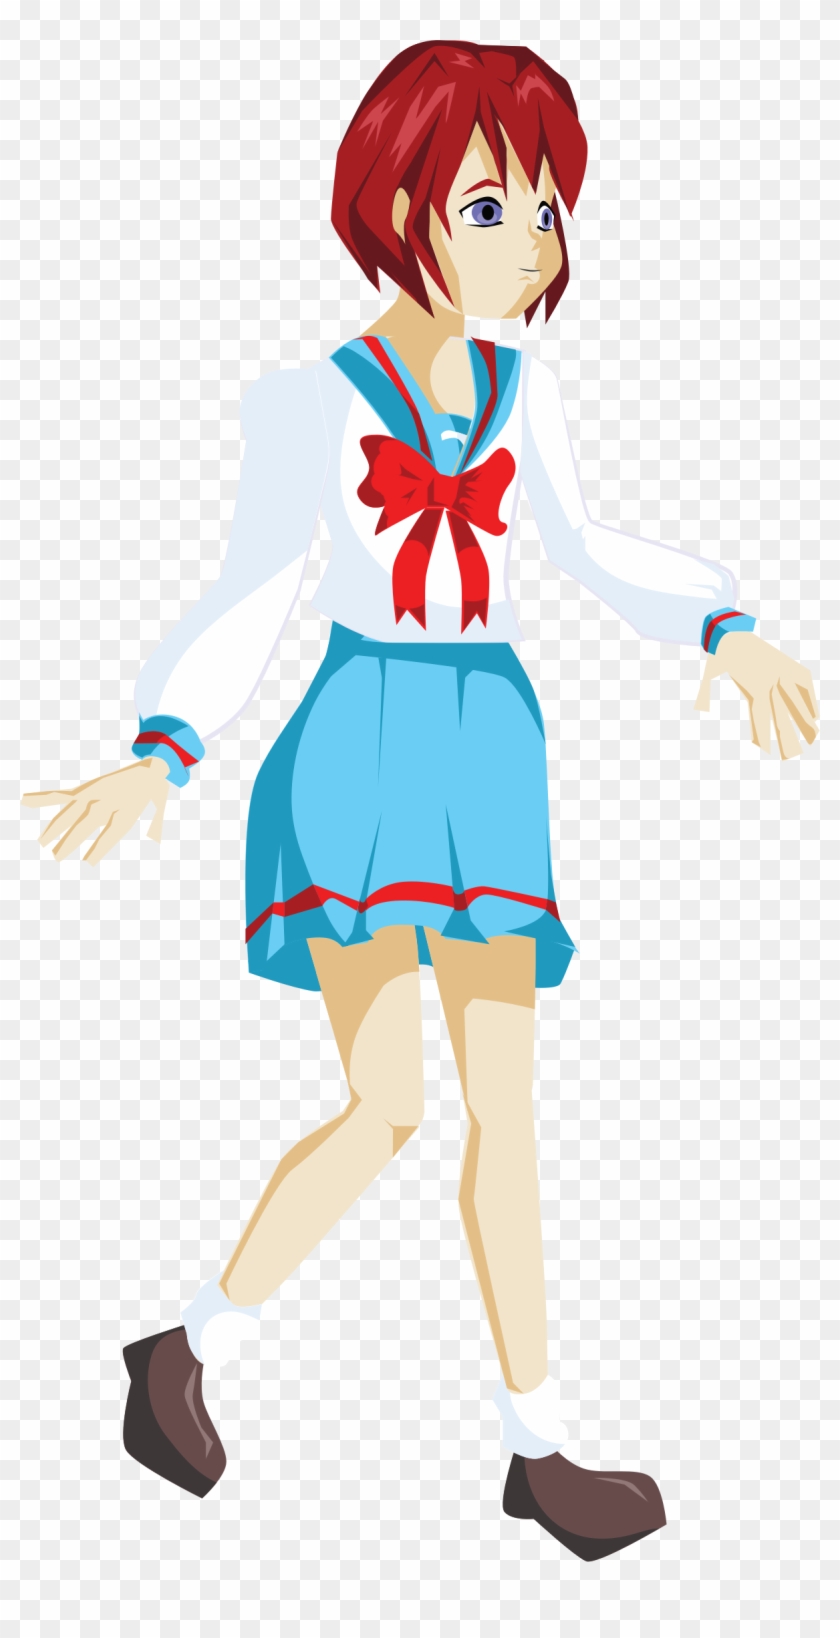 Medium Image - Anime School Girl Clipart #353658